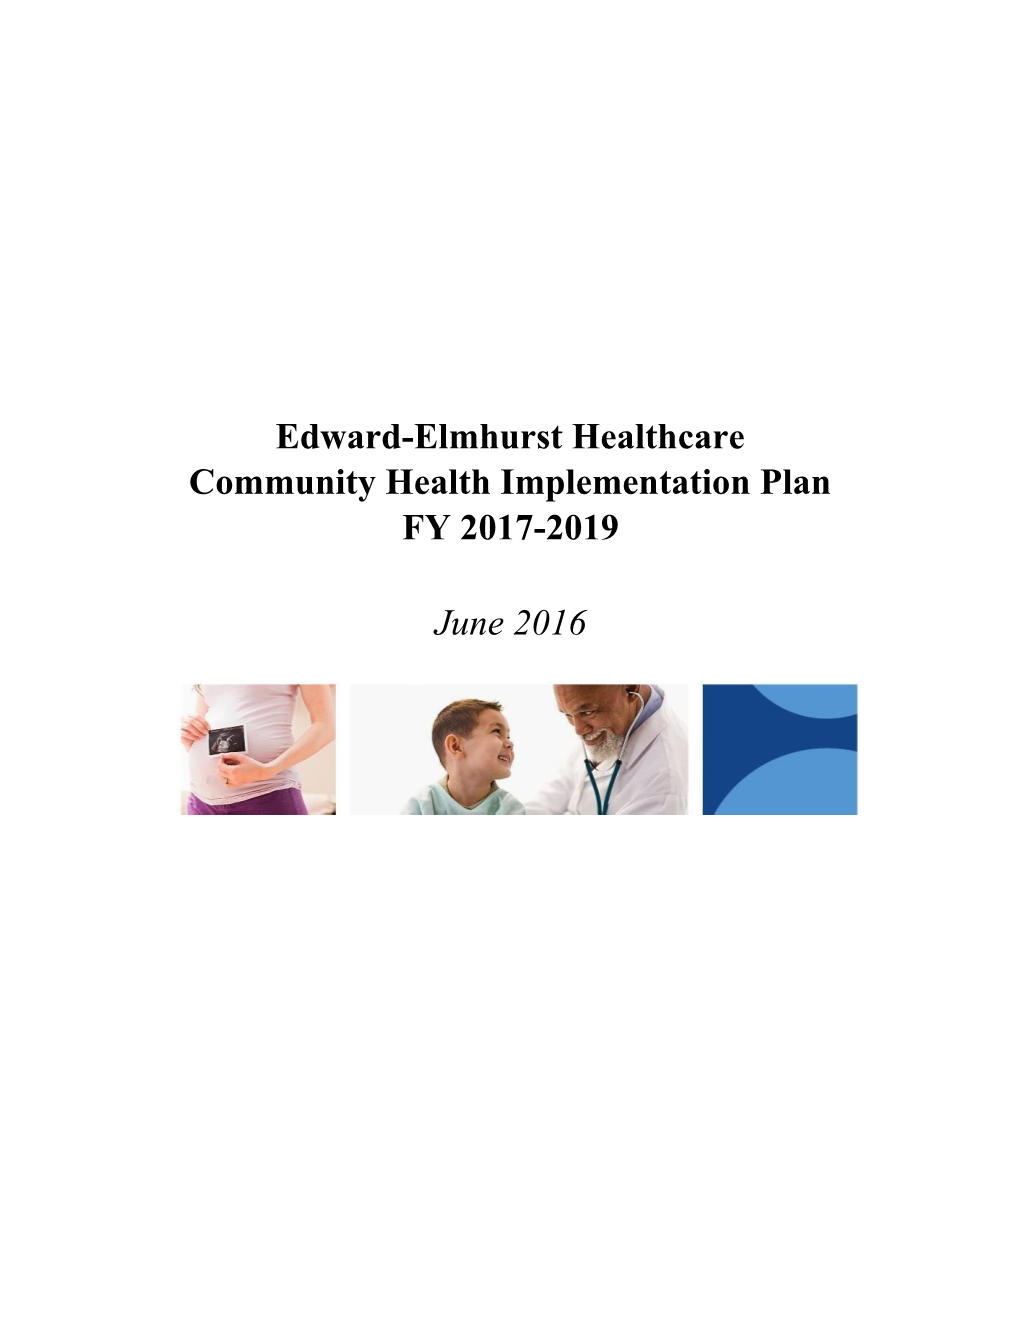 Edward-Elmhurst Healthcare Community Health Implementation Plan FY 2017-2019 June 2016